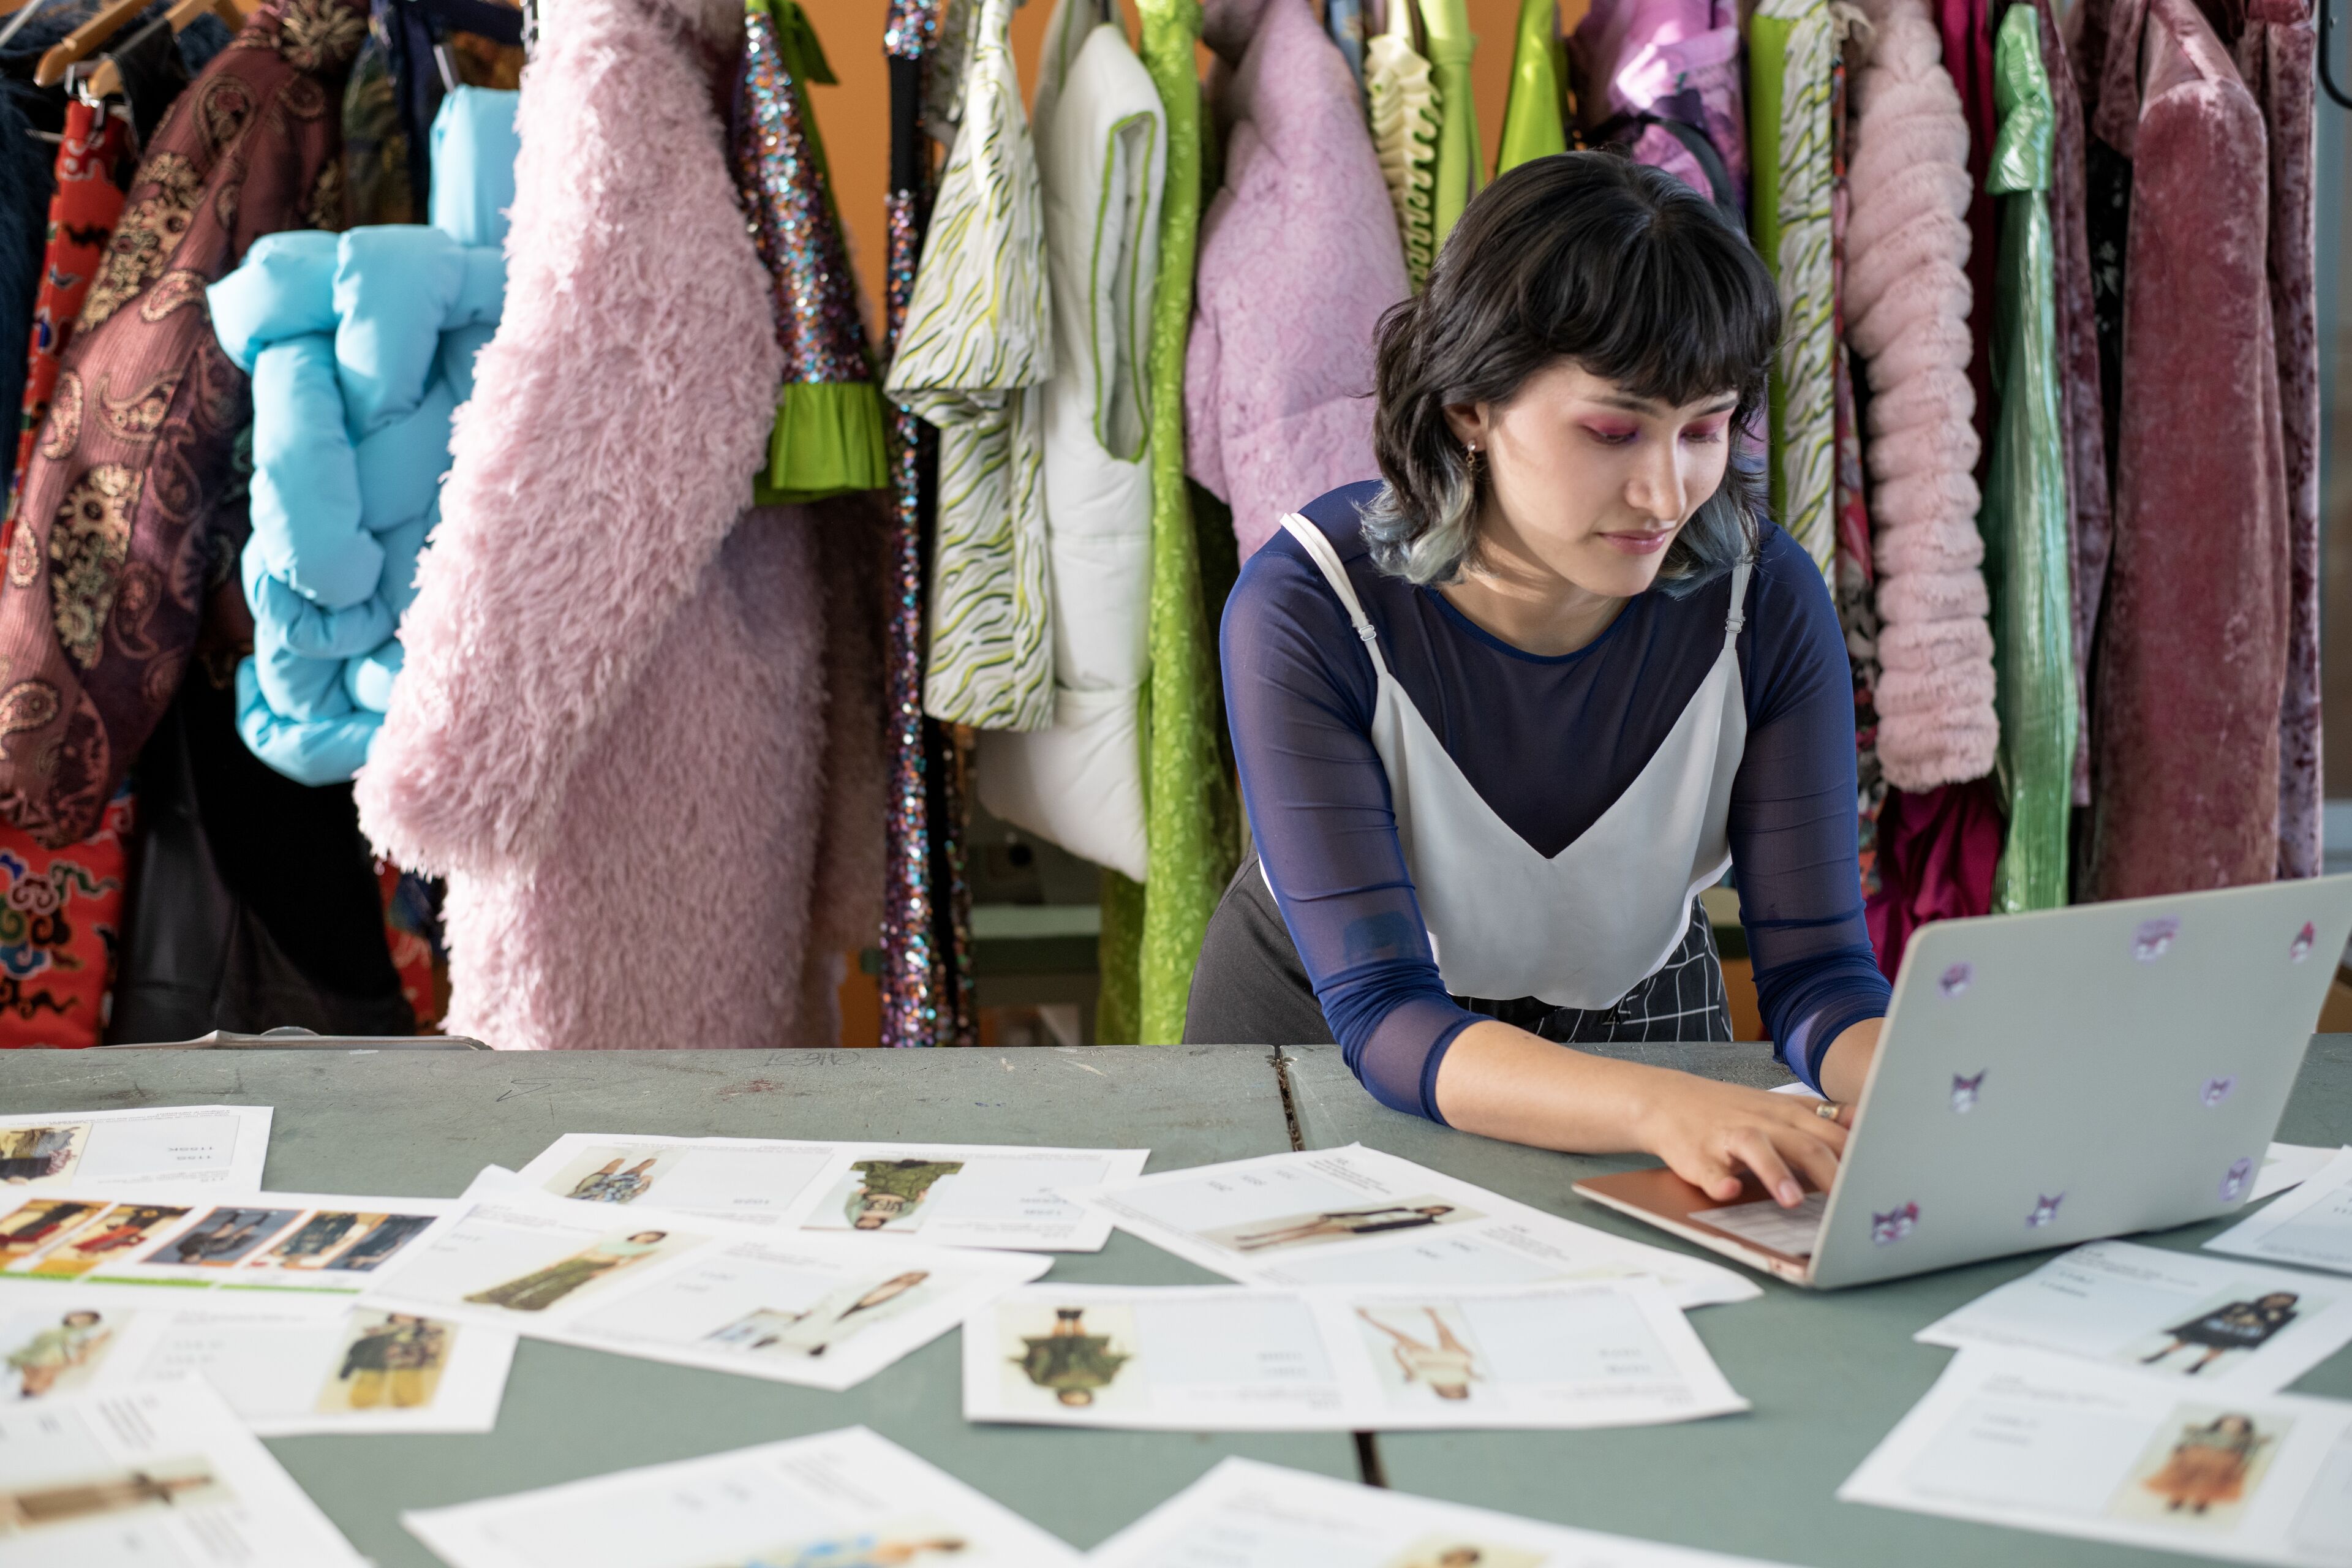 A focused fashion designer reviews garment photos amidst racks of vibrant fabrics.